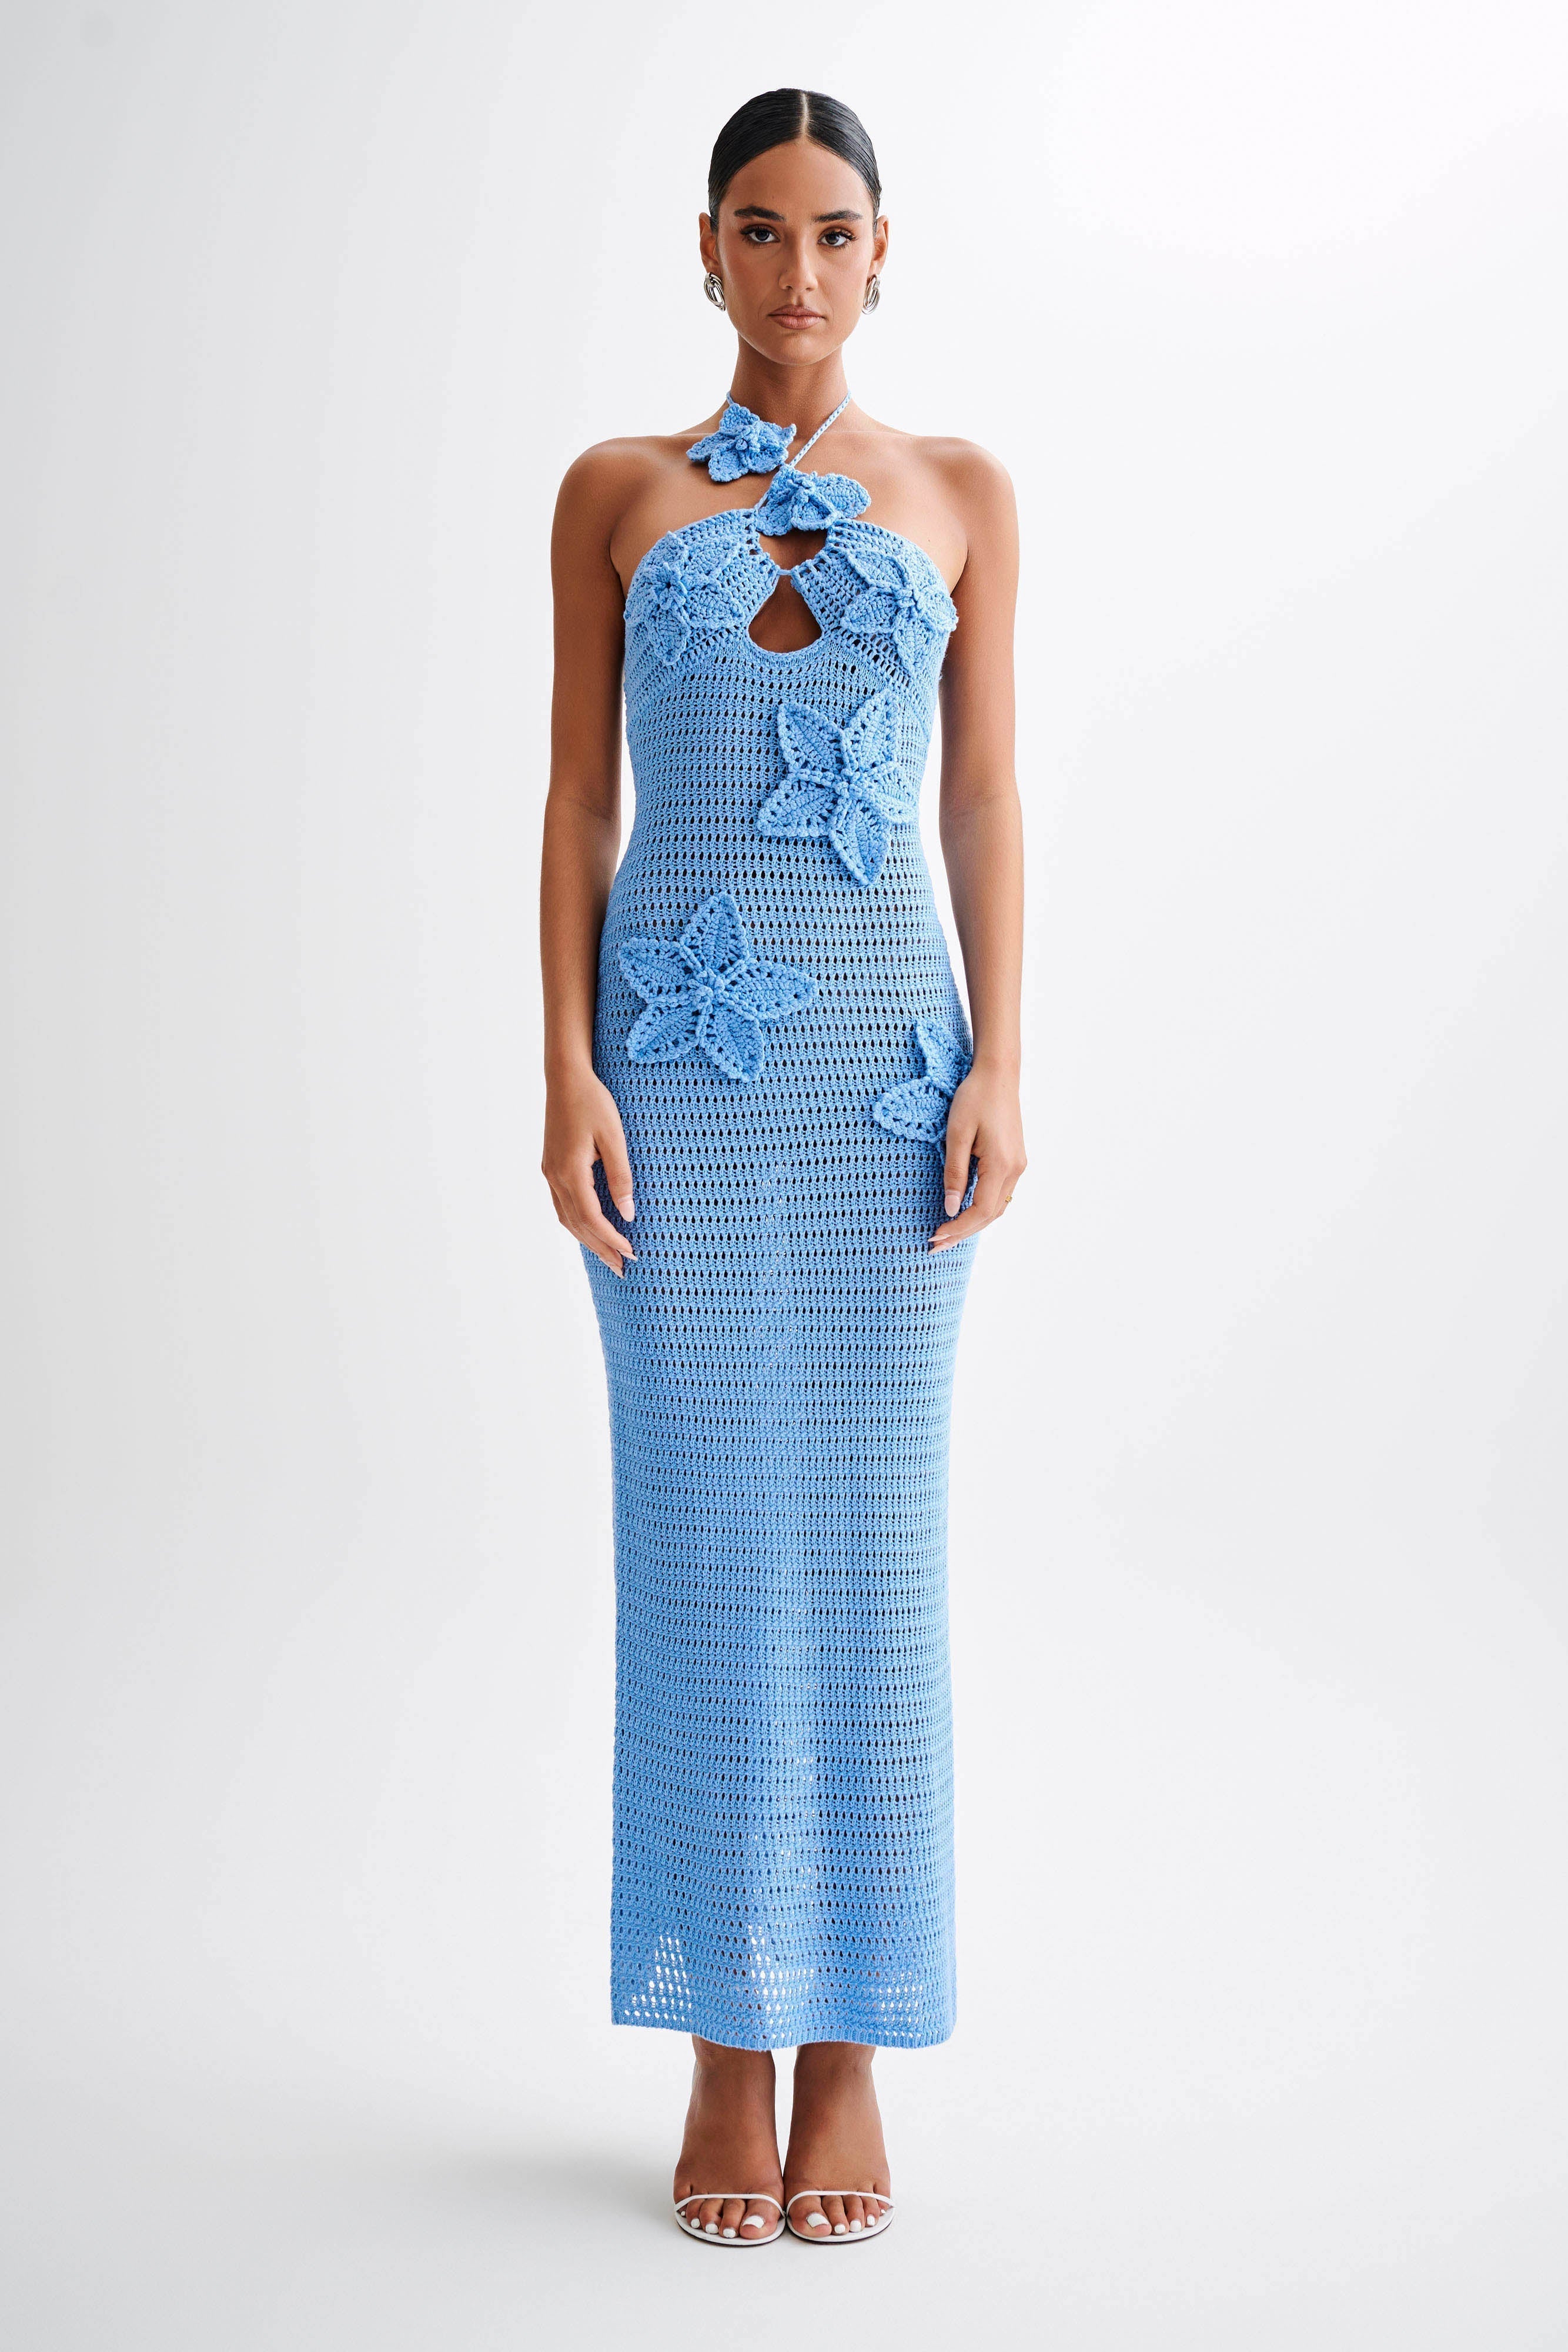 Simone™ - Crocheted Maxi Dress